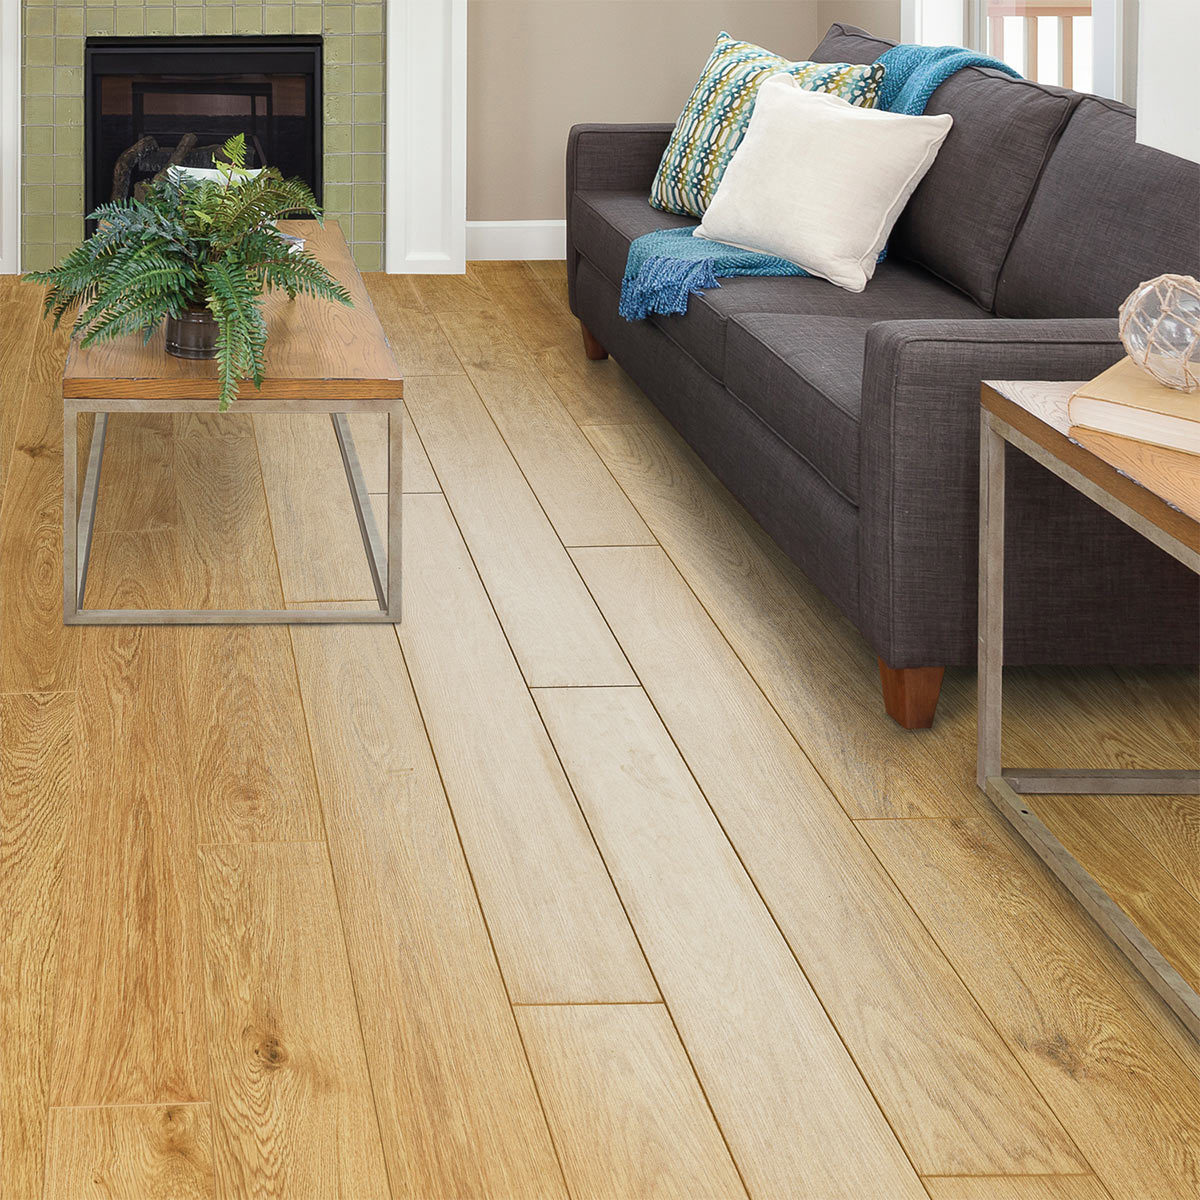 Golden Select Nottingham Oak Laminate, Costco Laminate Flooring Reviews Uk